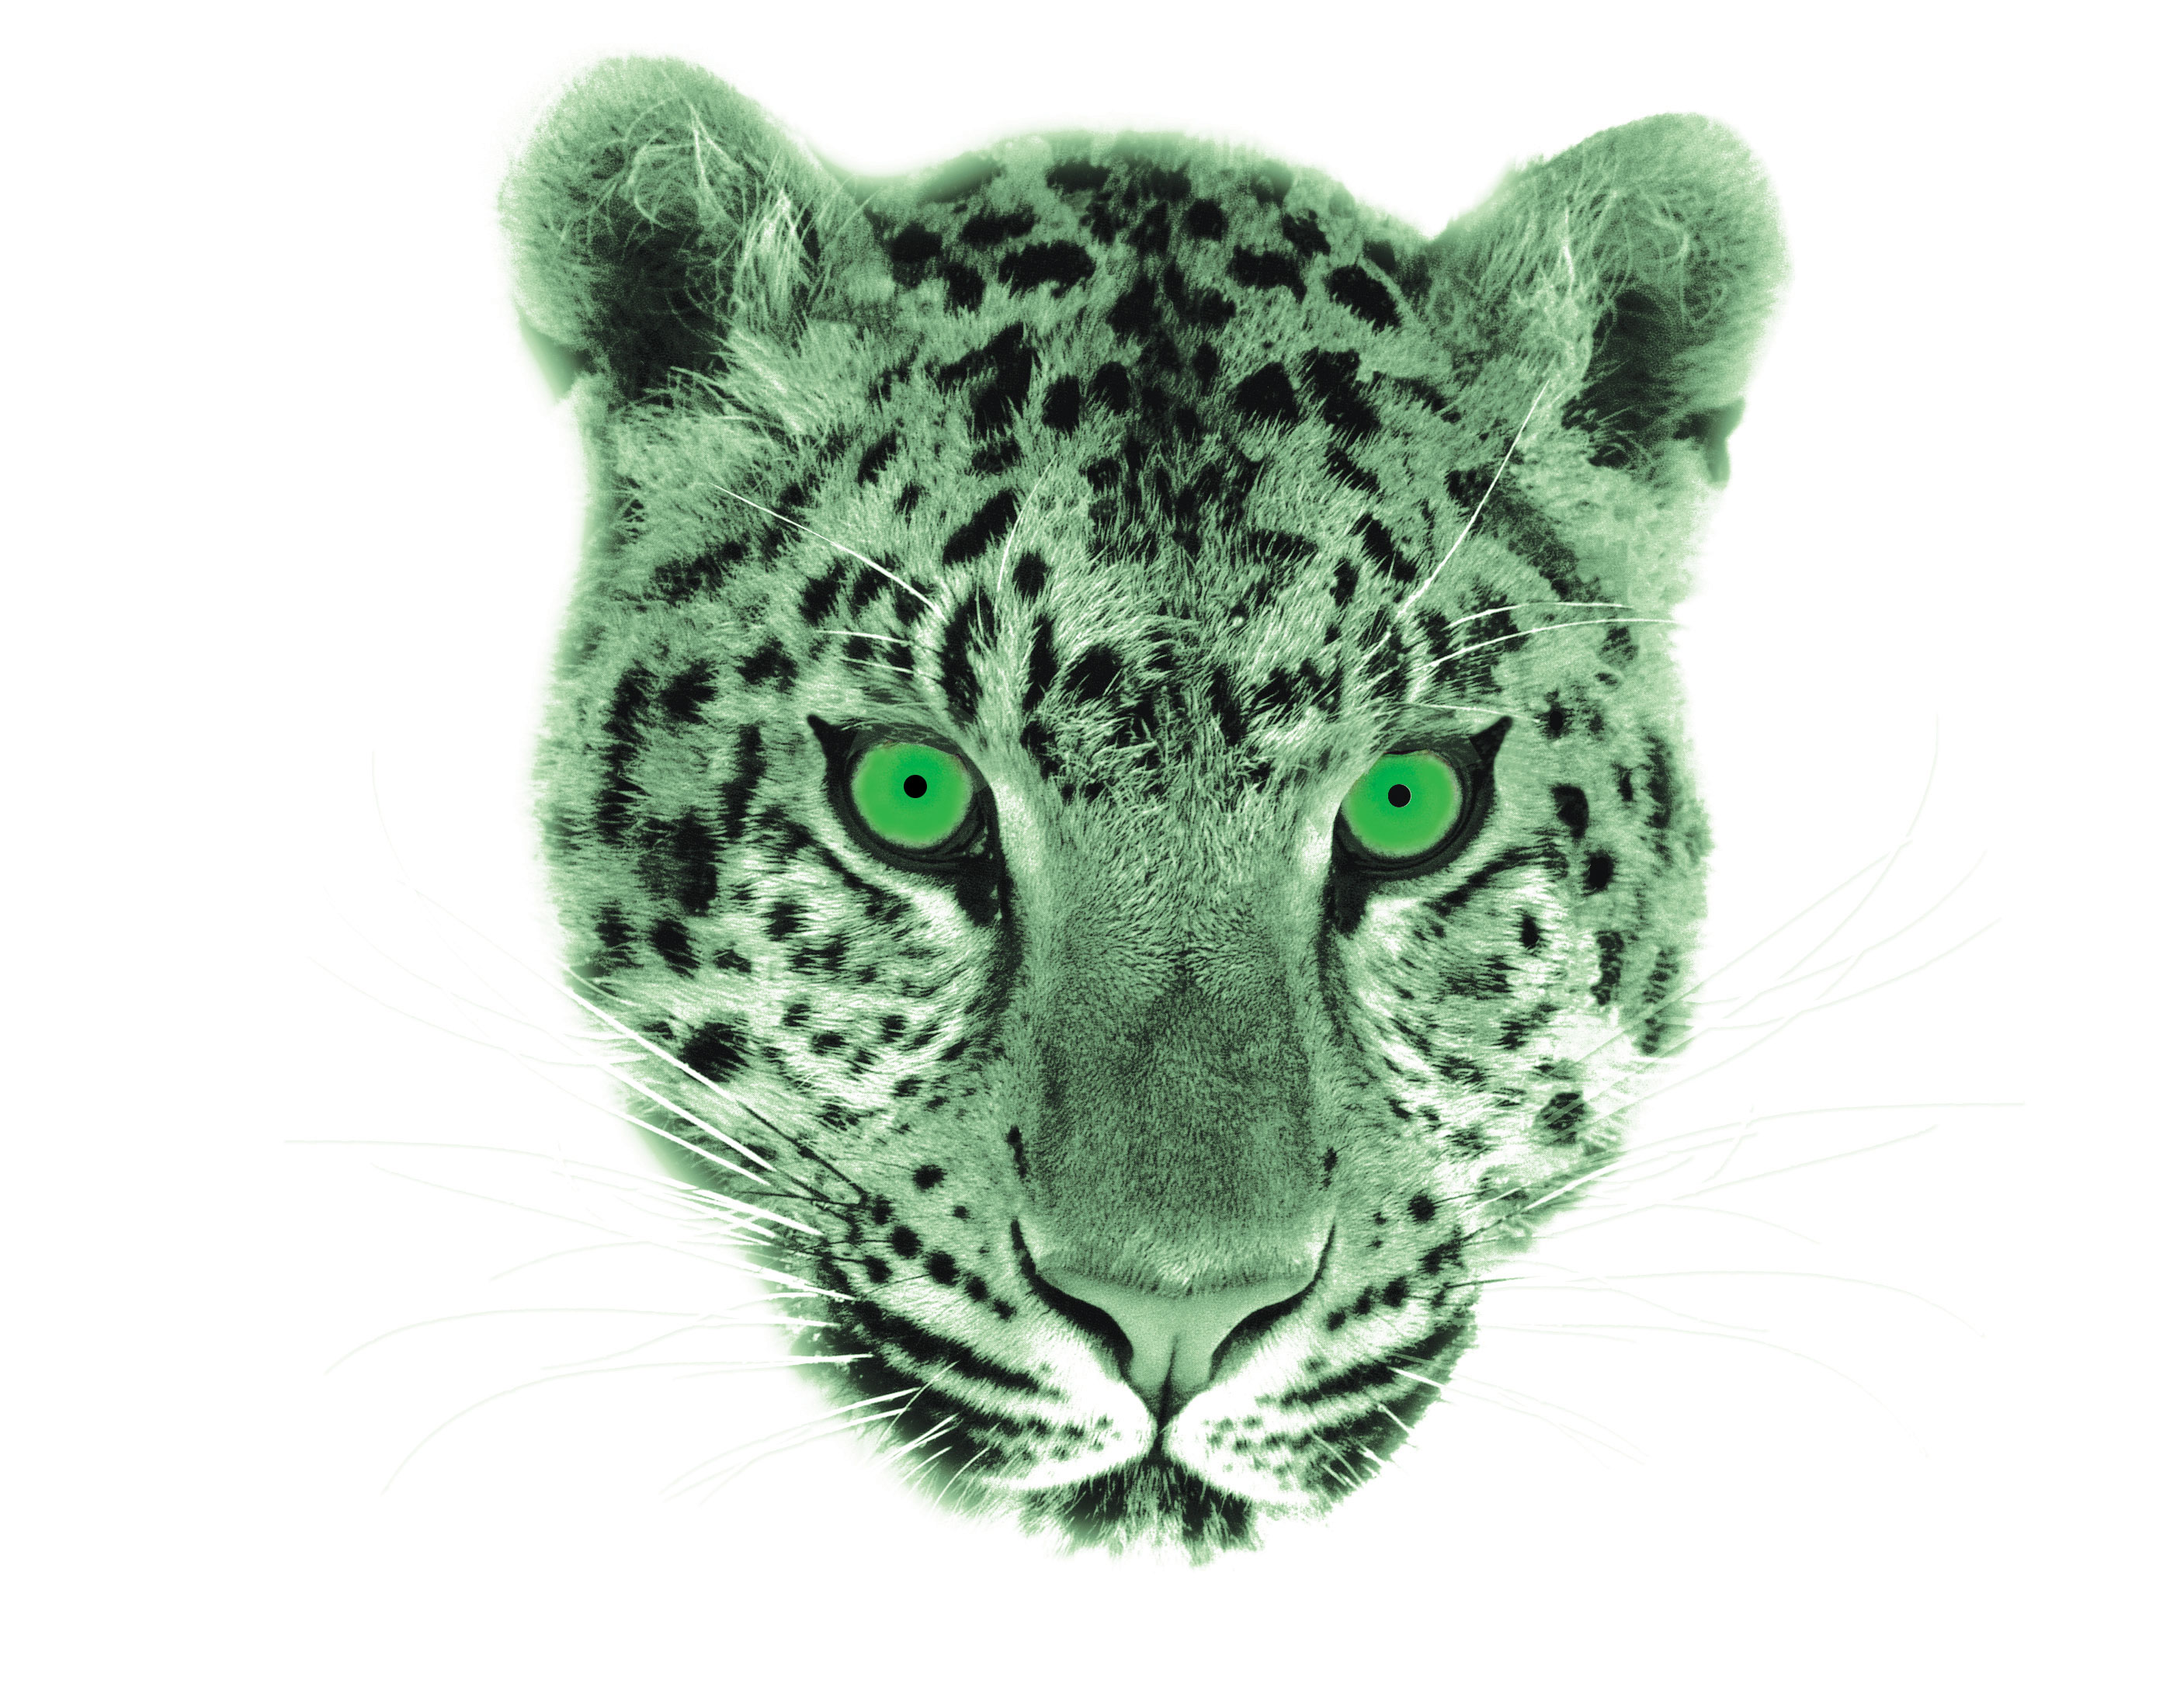 CHUI the leopard. Company logo and Avatar.